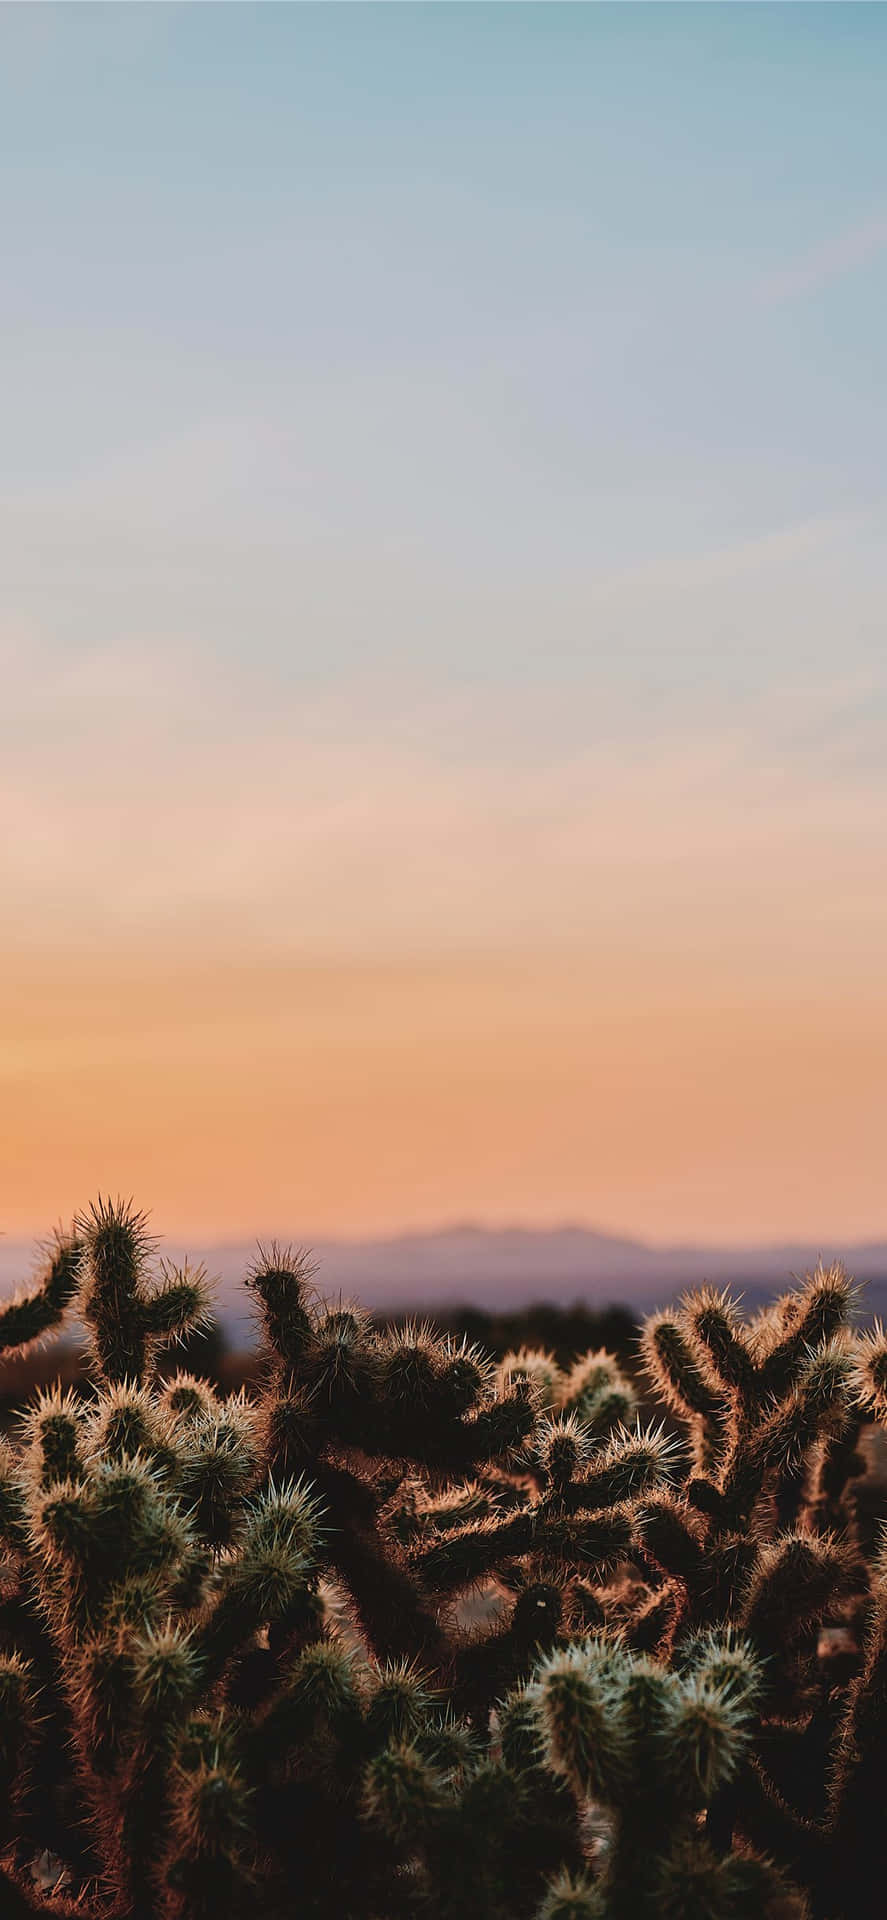 Kaktusin Der Wüste Iphone Wallpaper